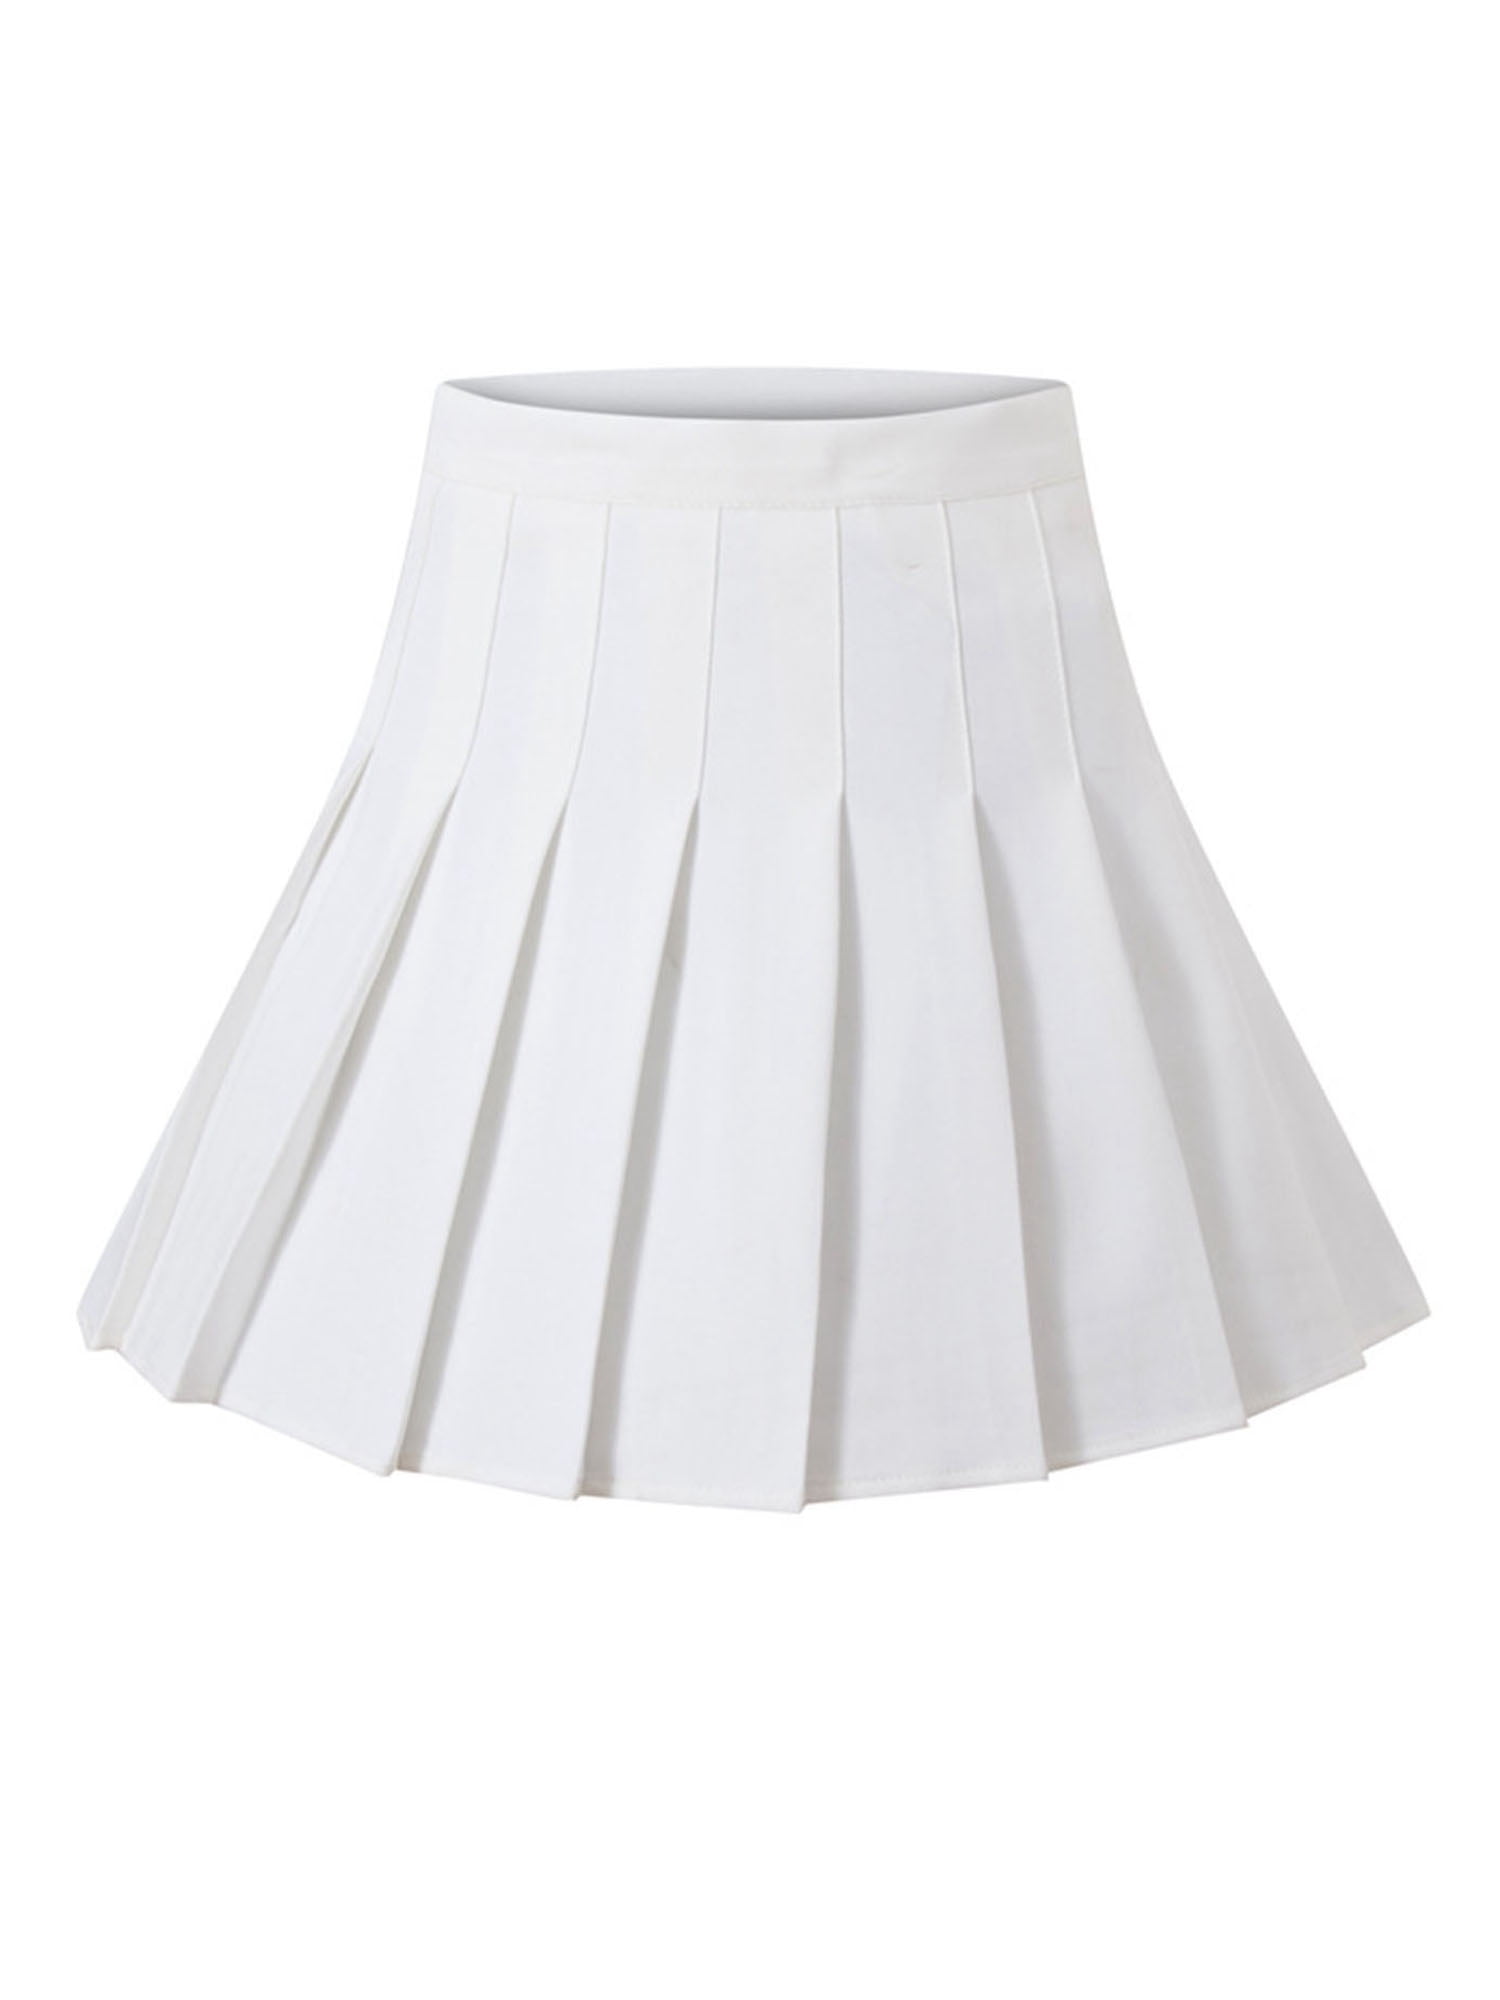 100% Cotton Plain Kids Girls White Pleated Skirt at best price in Noida